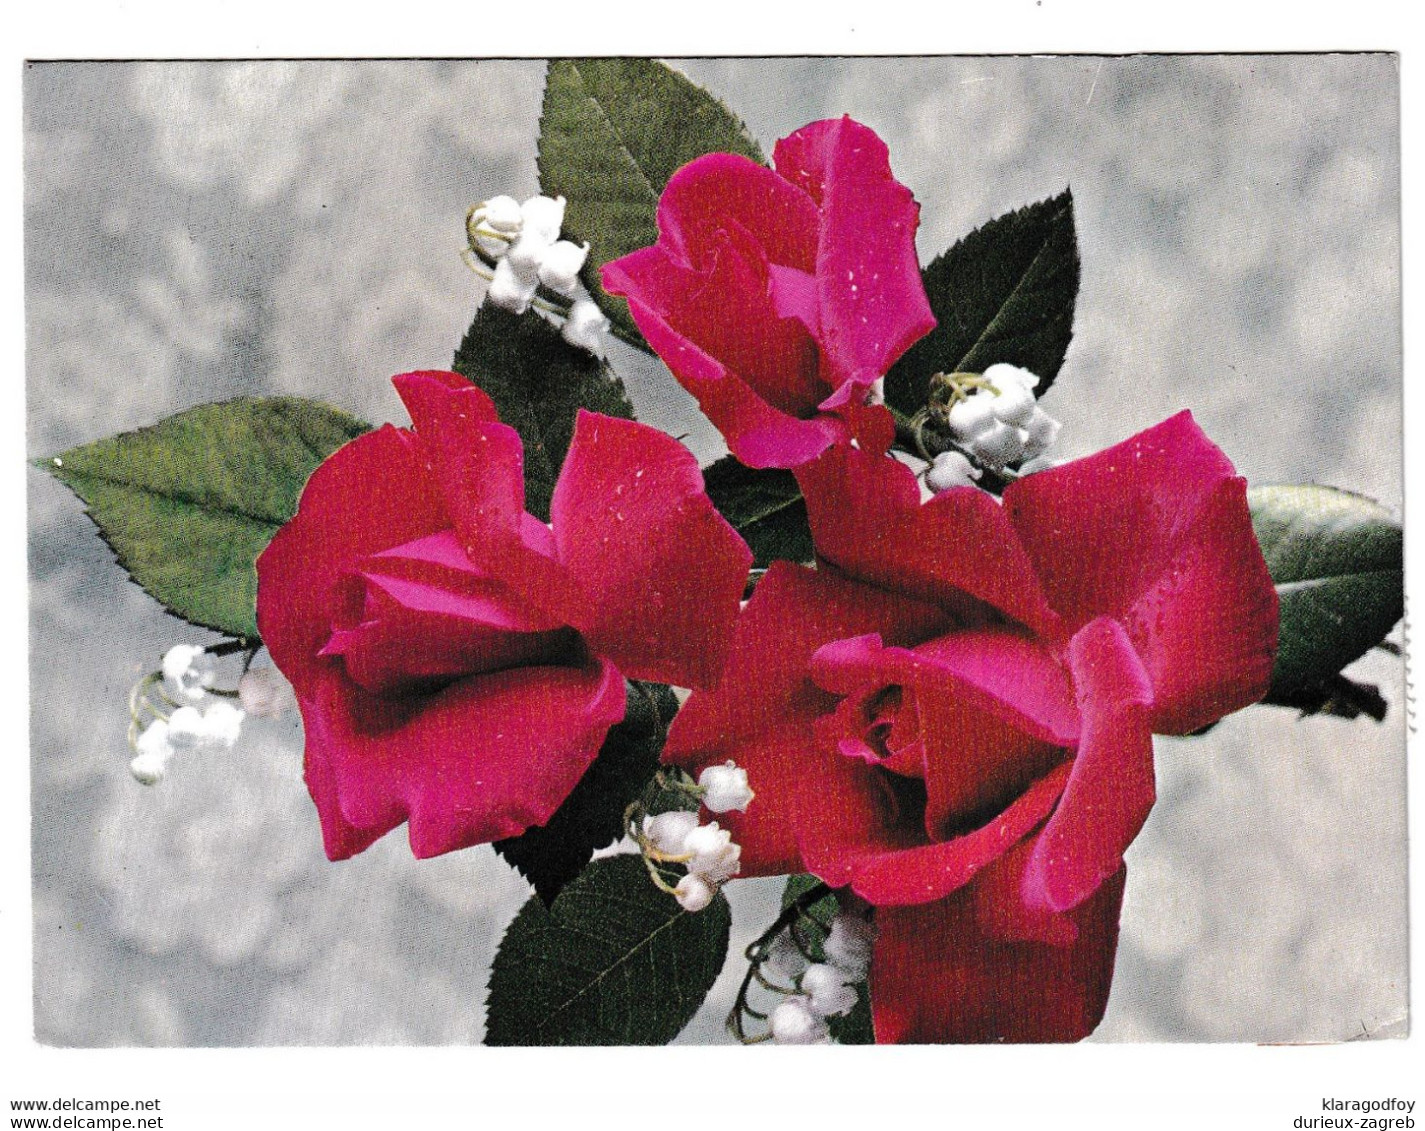 Yugoslavia Multifranked Roses Postcard Posted Registered 1979 Feketić To Germany B210410 - Cartas & Documentos